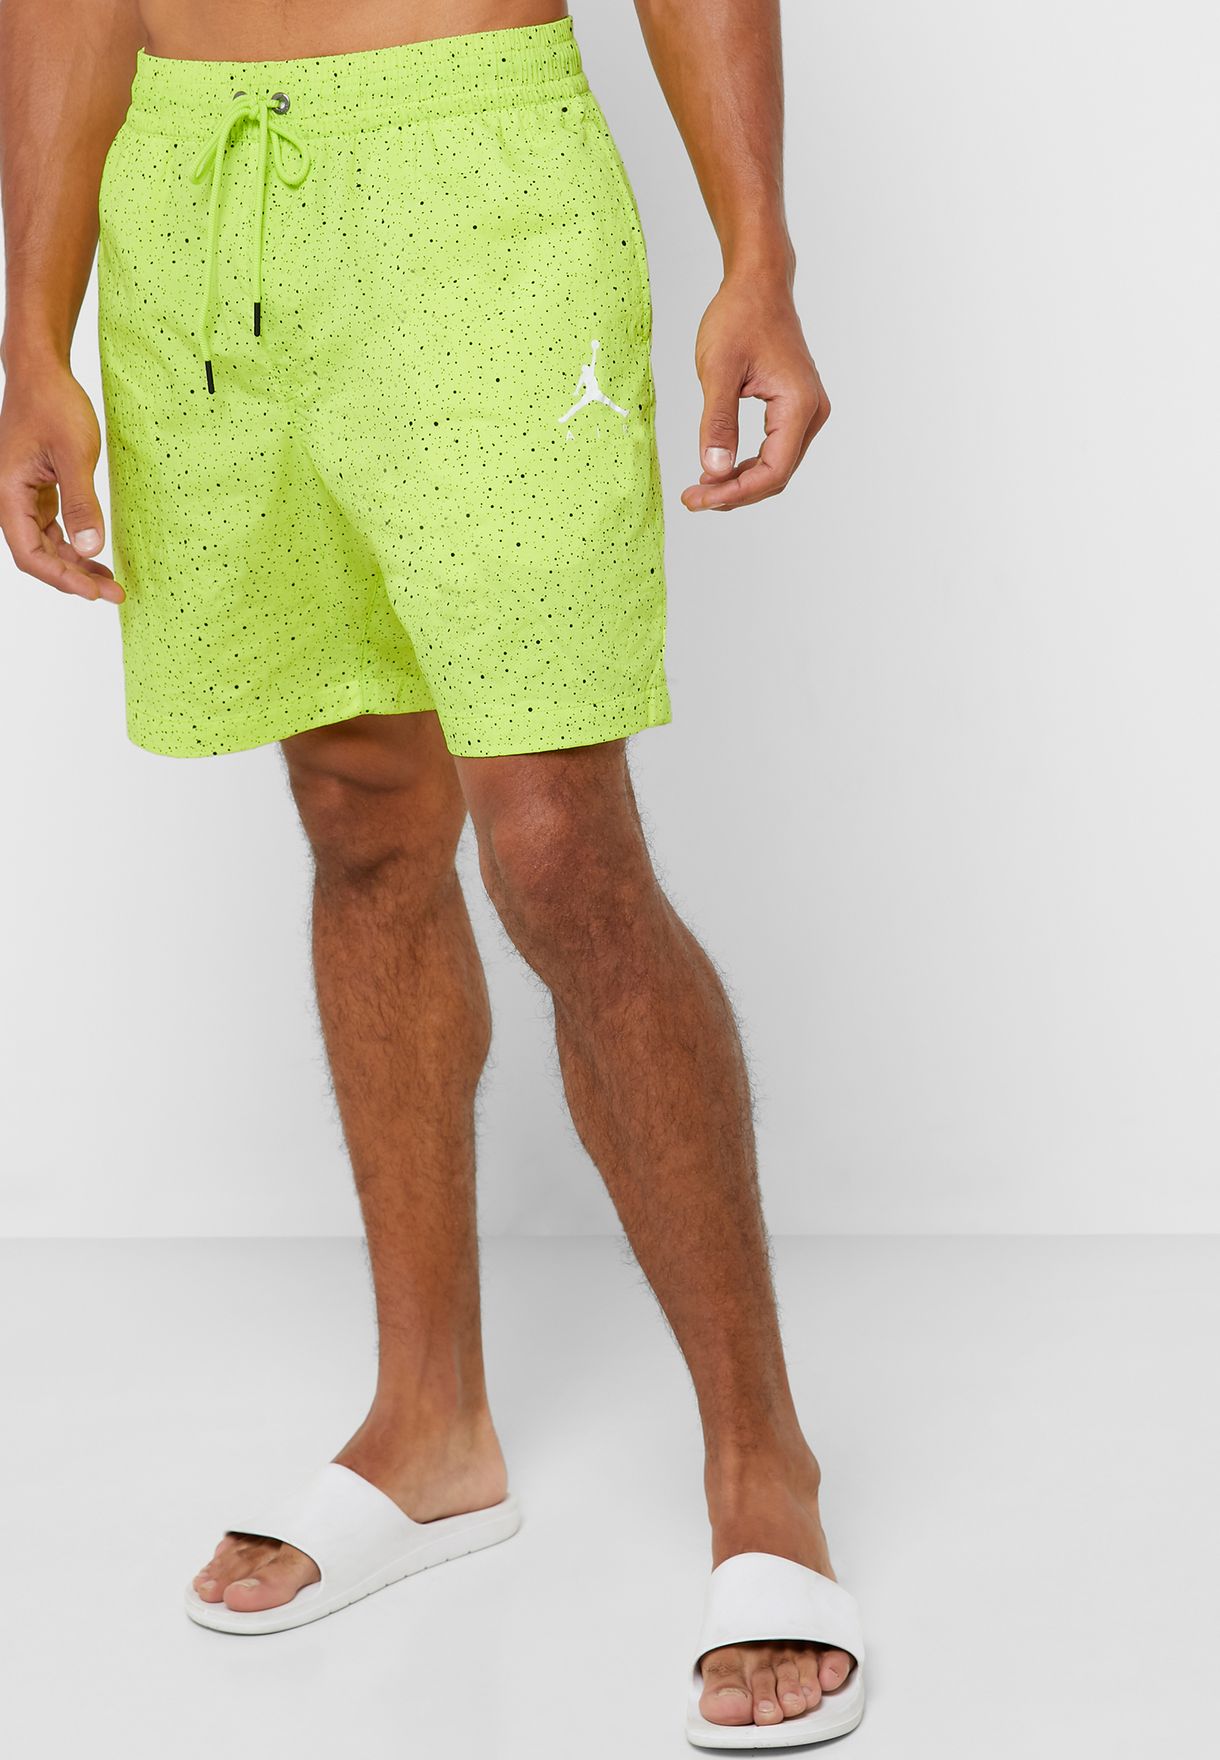 jordan poolside shorts